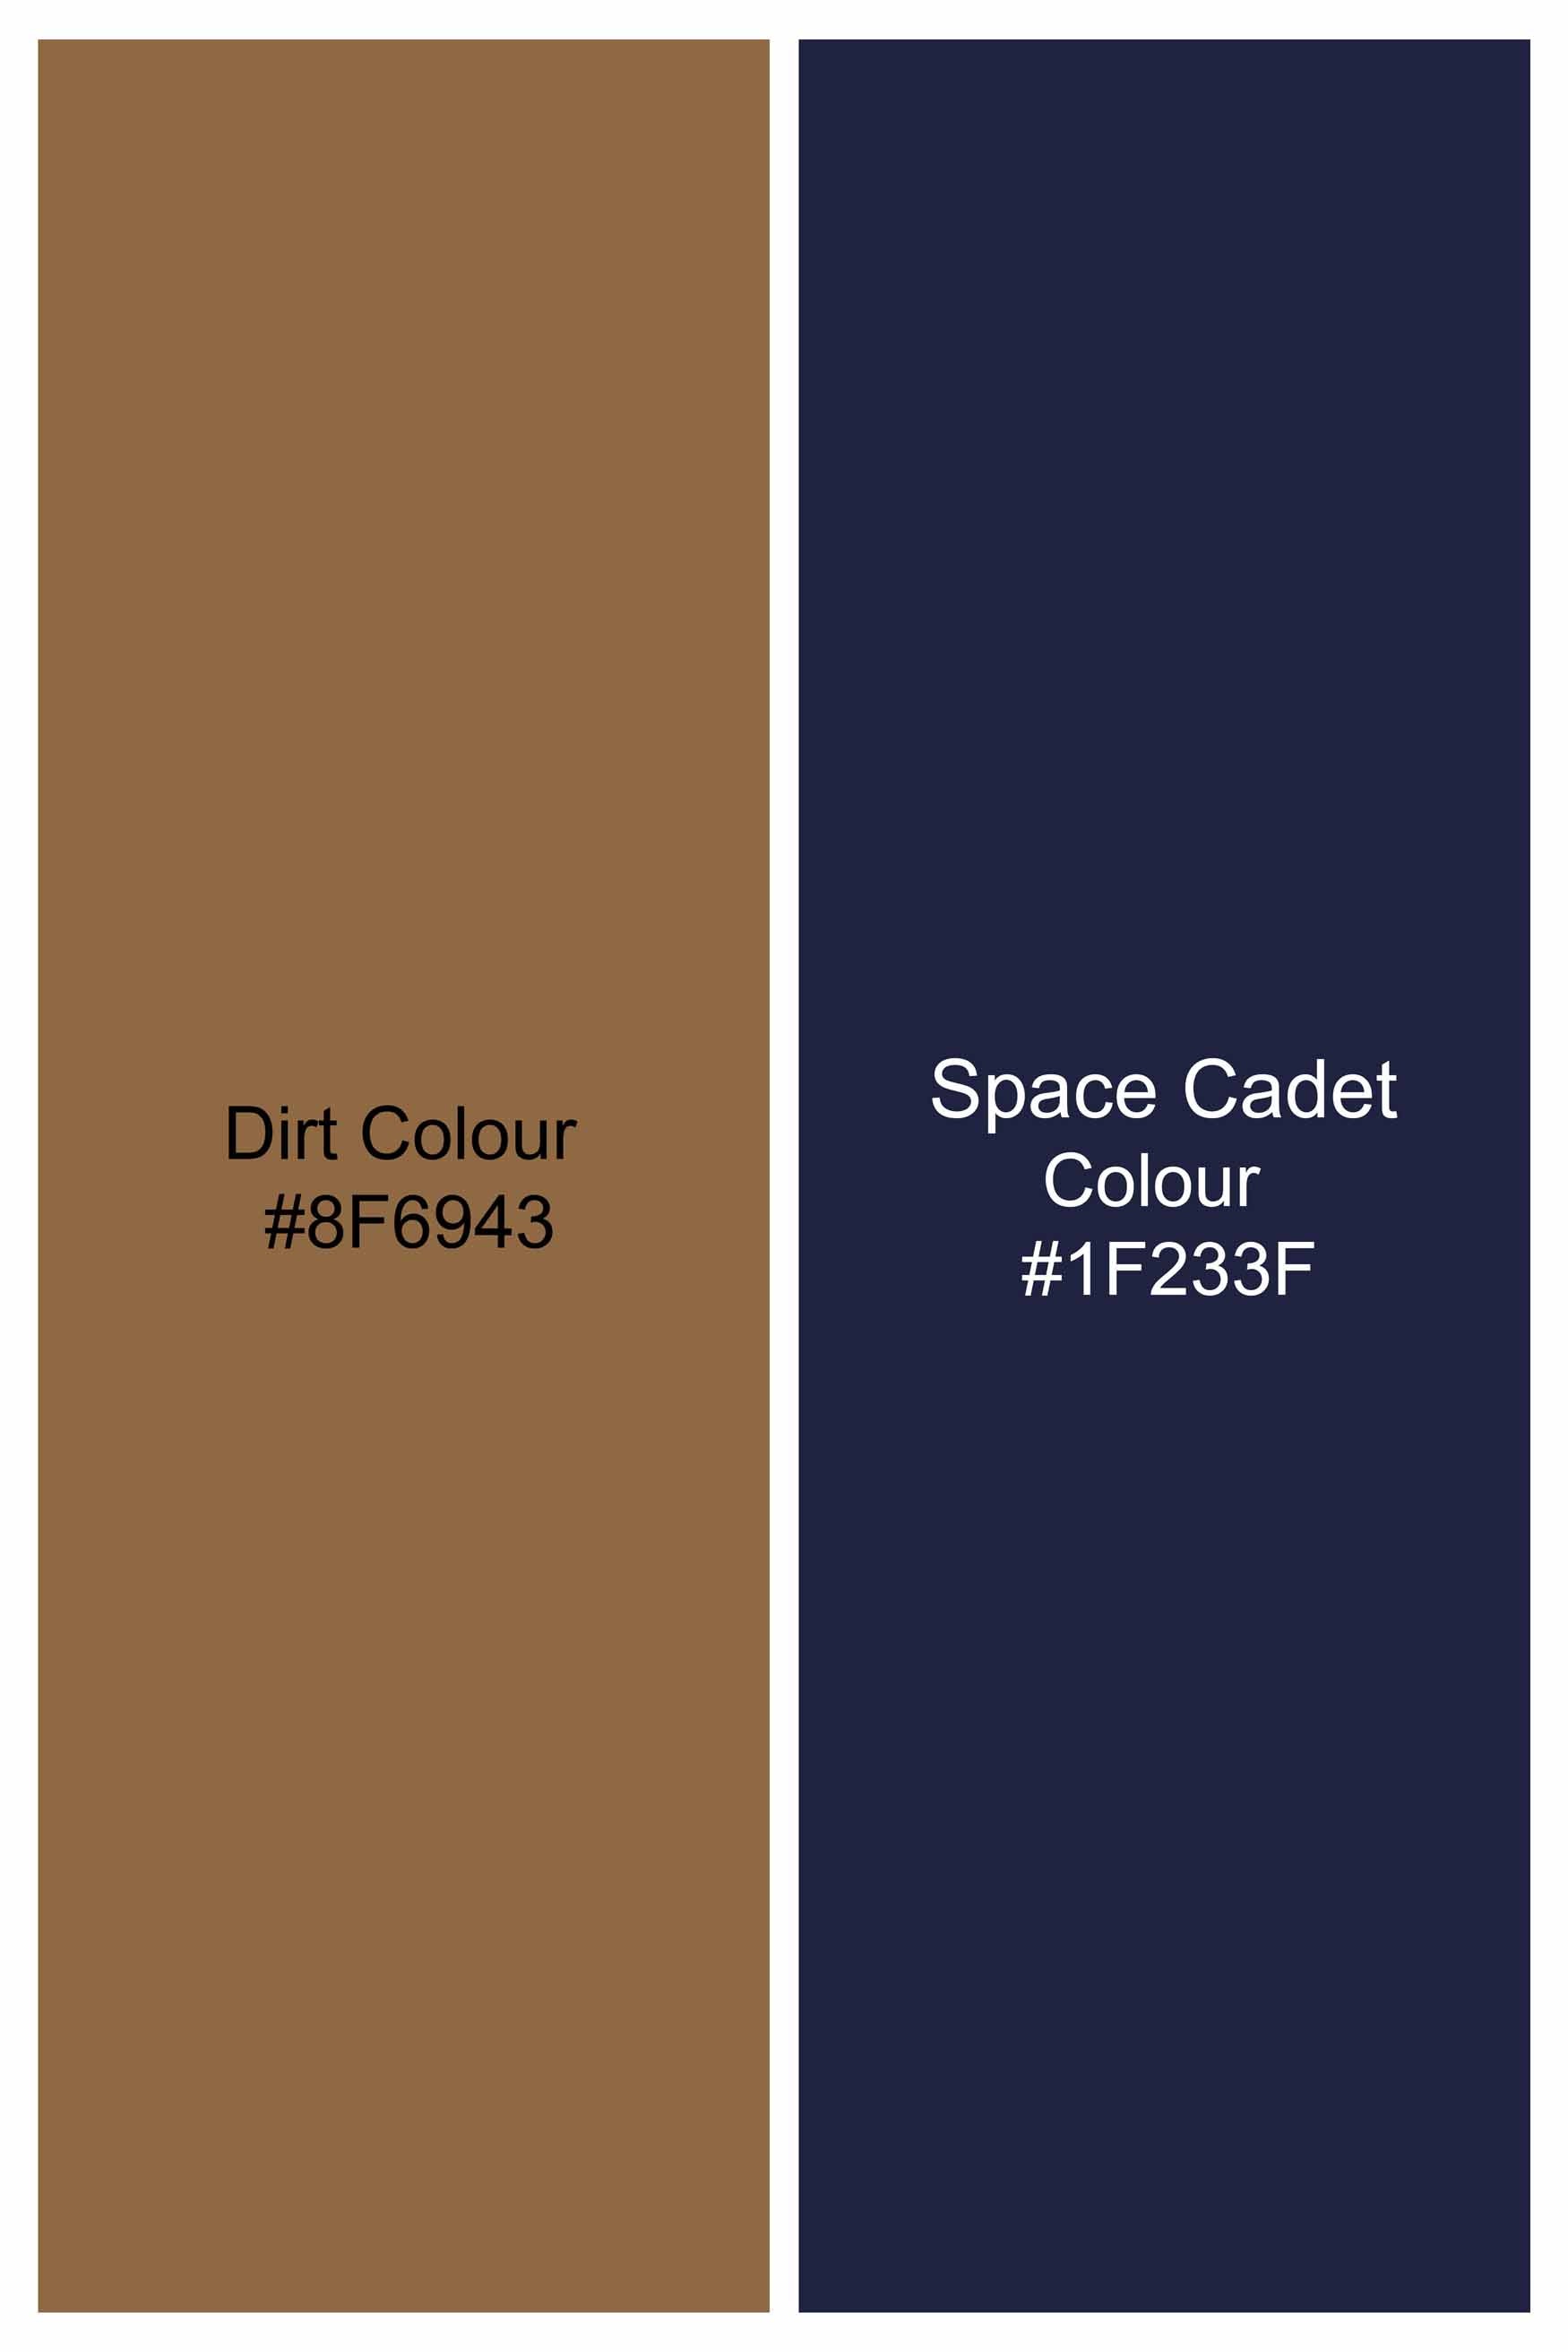 Dirt Brown and Space Cadet Blue Printed Royal Oxford Reversible Shirt 7587-RPRT75-38, 7587-RPRT75-H-38, 7587-RPRT75-39, 7587-RPRT75-H-39, 7587-RPRT75-40, 7587-RPRT75-H-40, 7587-RPRT75-42, 7587-RPRT75-H-42, 7587-RPRT75-44, 7587-RPRT75-H-44, 7587-RPRT75-46, 7587-RPRT75-H-46, 7587-RPRT75-48, 7587-RPRT75-H-48, 7587-RPRT75-50, 7587-RPRT75-H-50, 7587-RPRT75-52, 7587-RPRT75-H-52